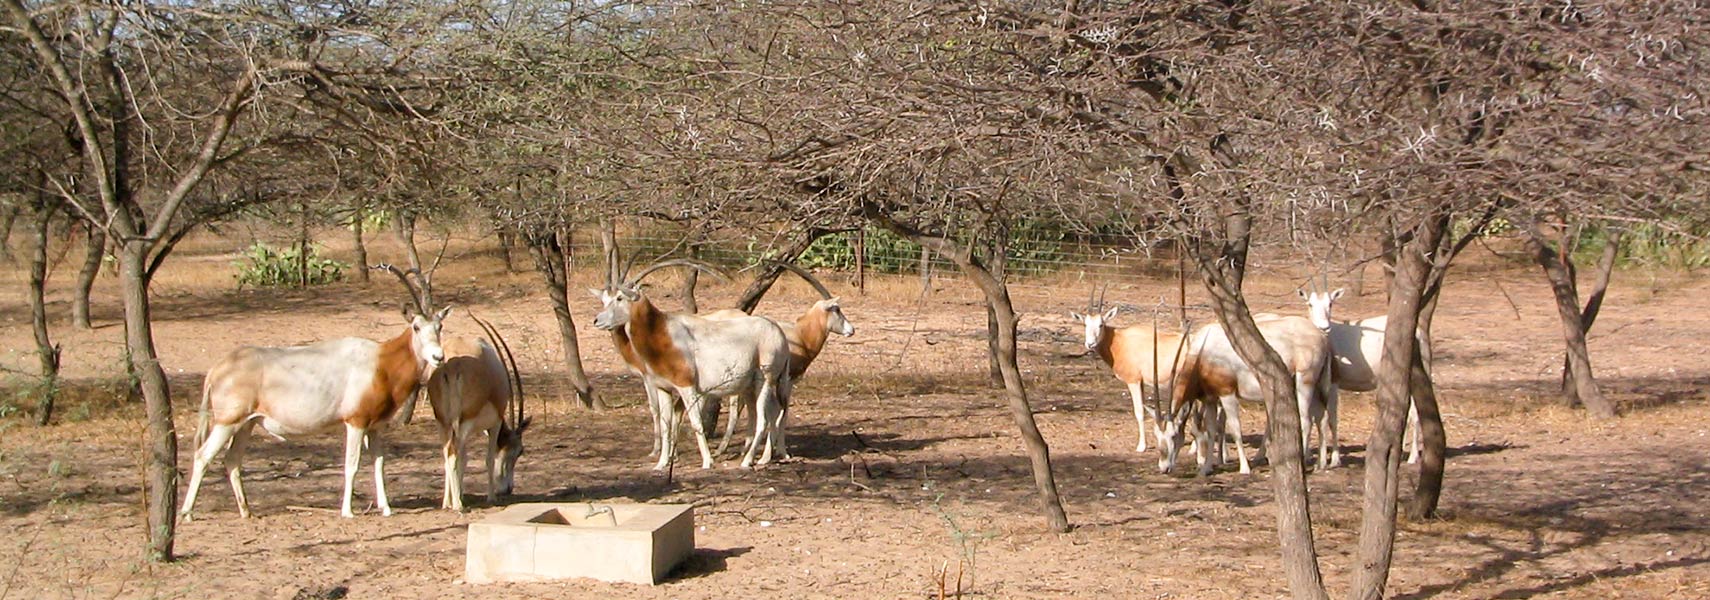 Scimitar oryx in Guembeul game reserve Senegal